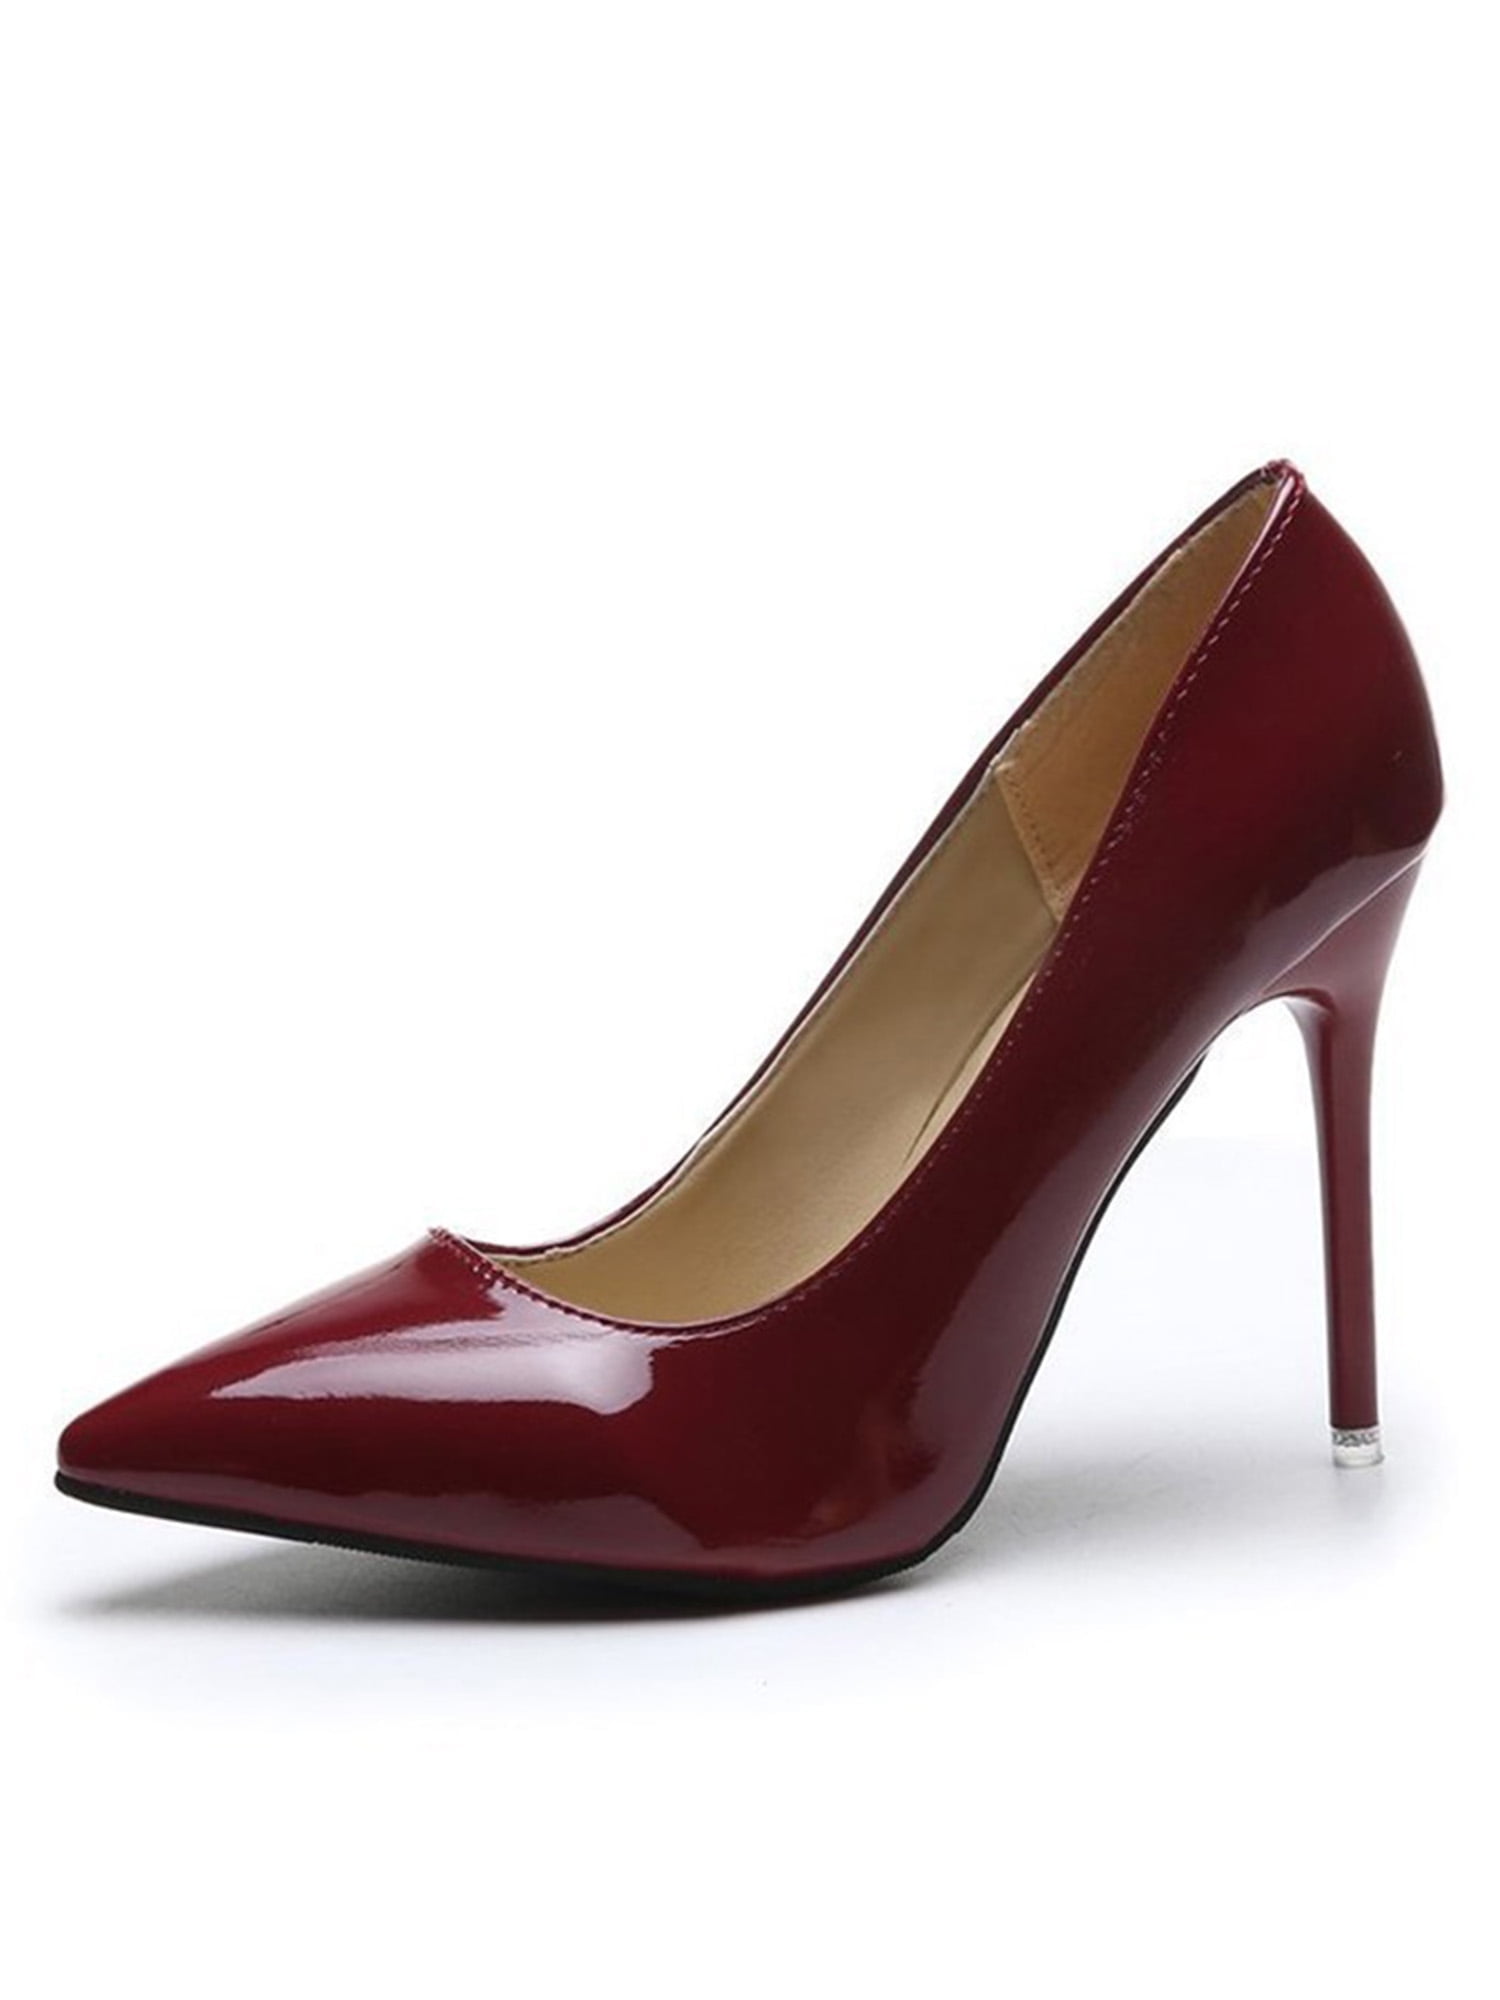 Peep Toe Women Pumps High Heels Thick Heel Platform Shoes Woman | Elegant  high heels, Shoes outfit fashion, Dress and heels